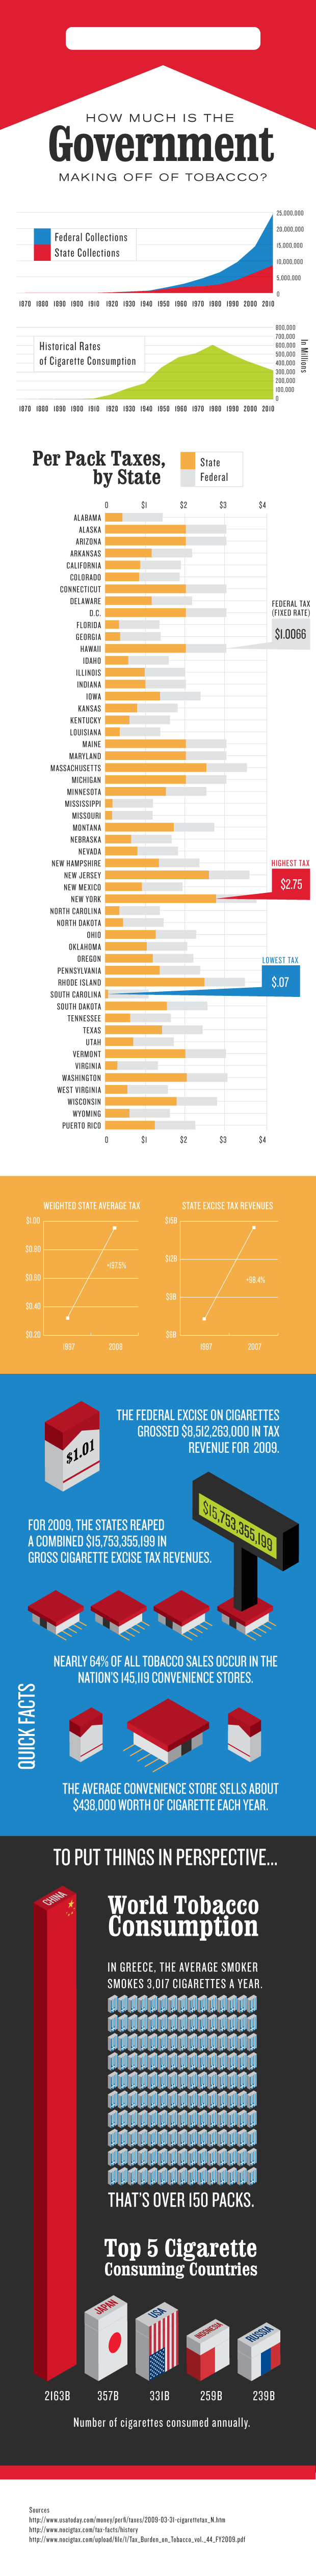 death from smoking statistics pareto chart